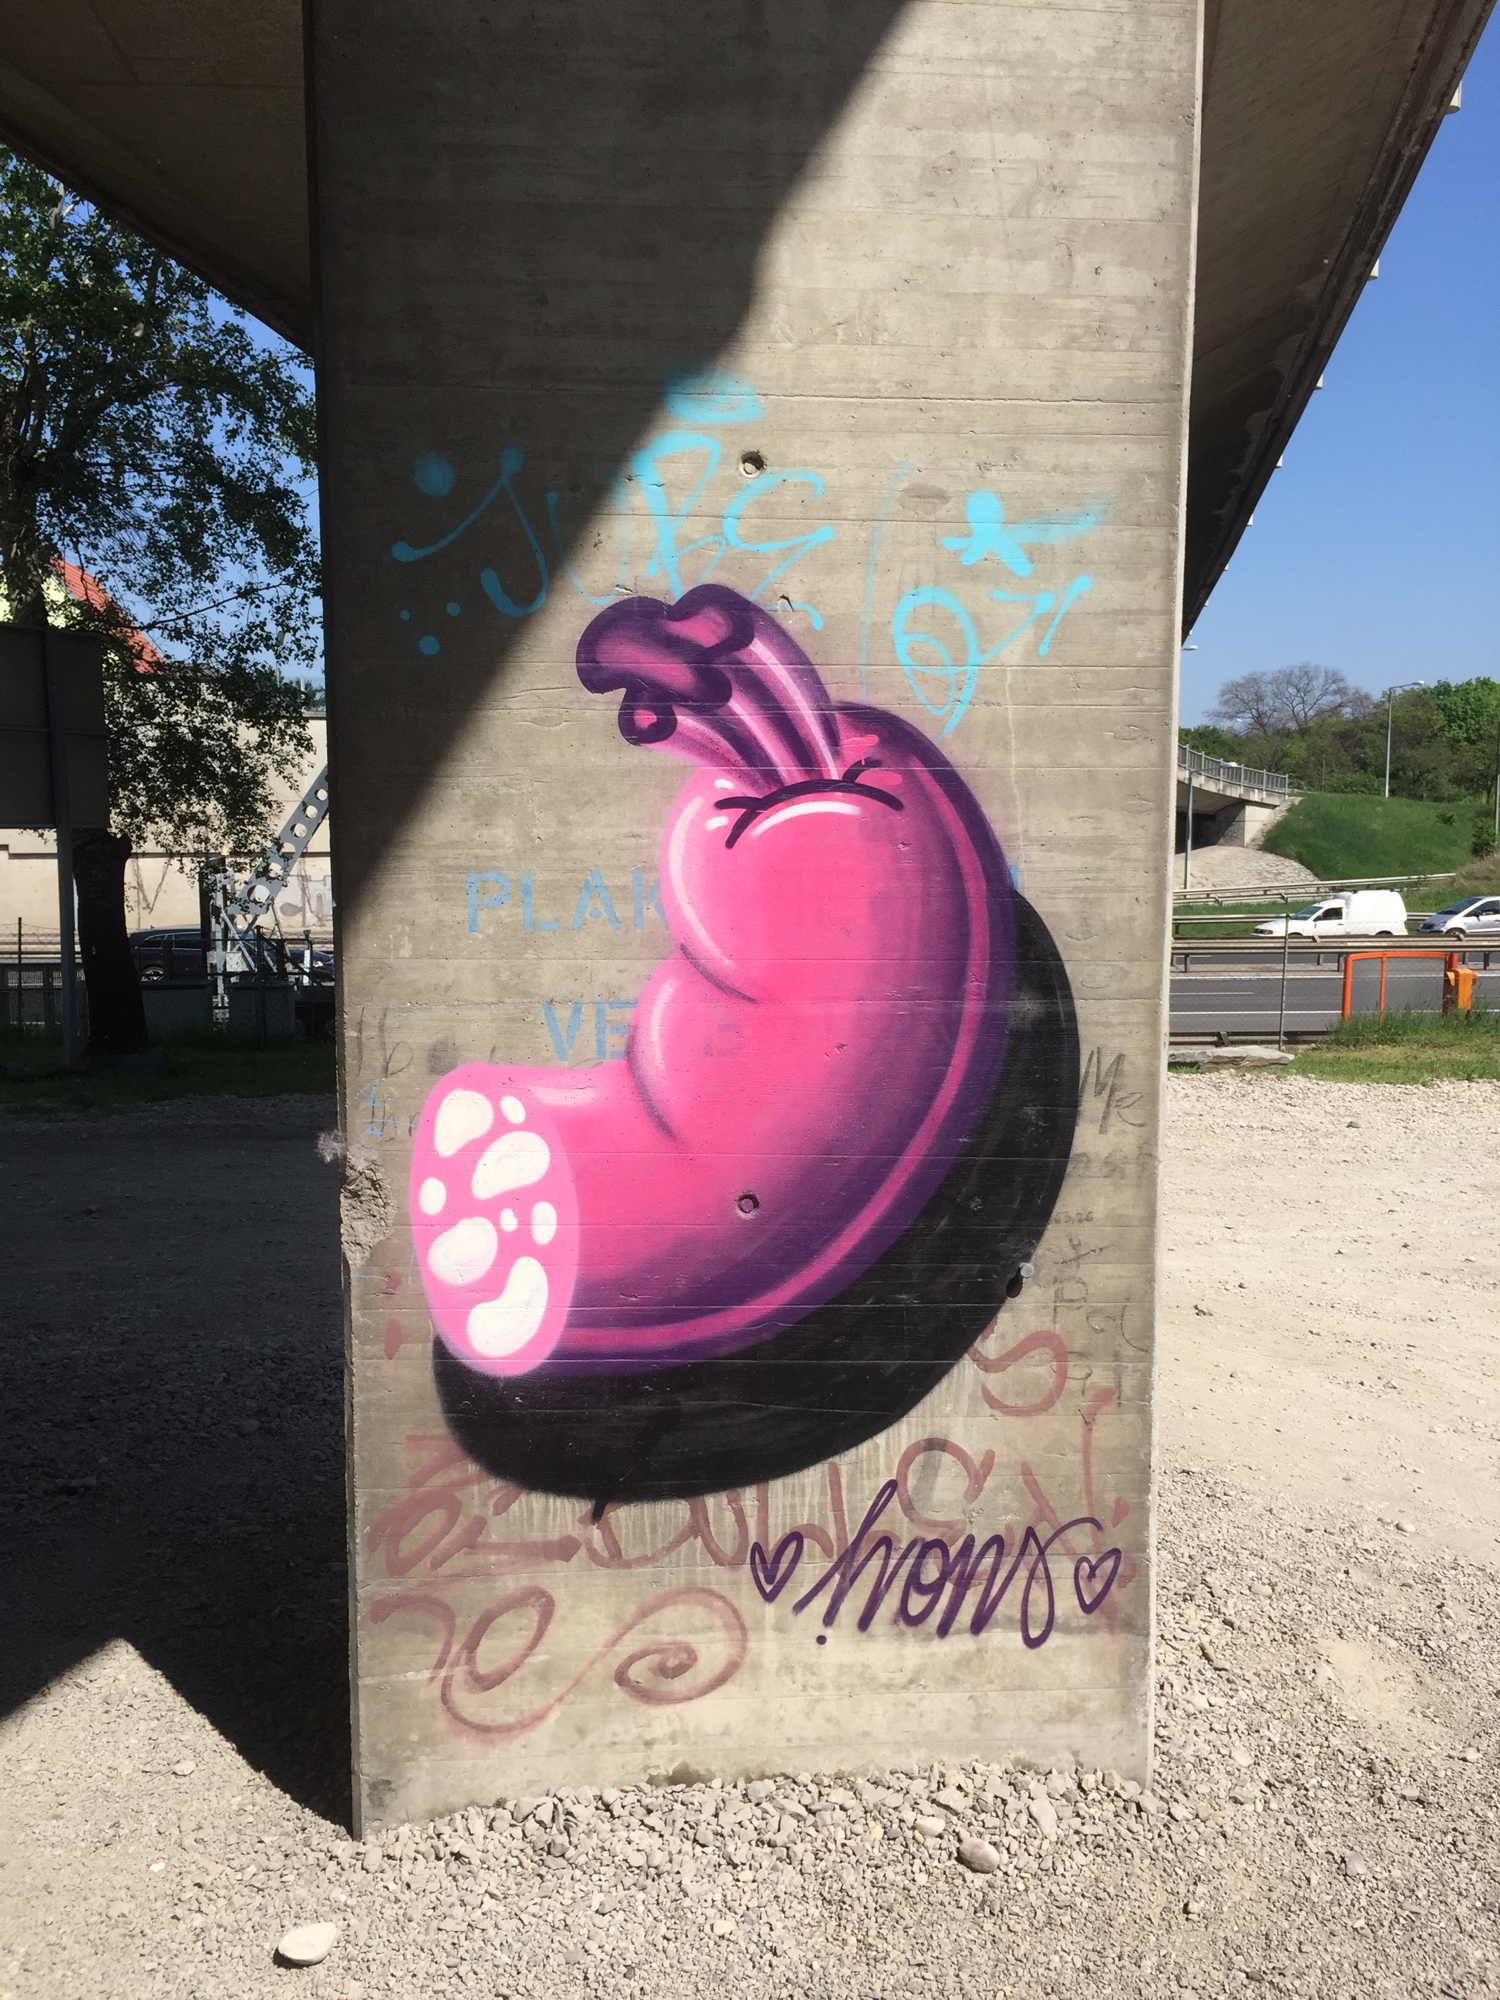 Interessantes Graffiti neben der Autobahn: rosafarbene Wurst